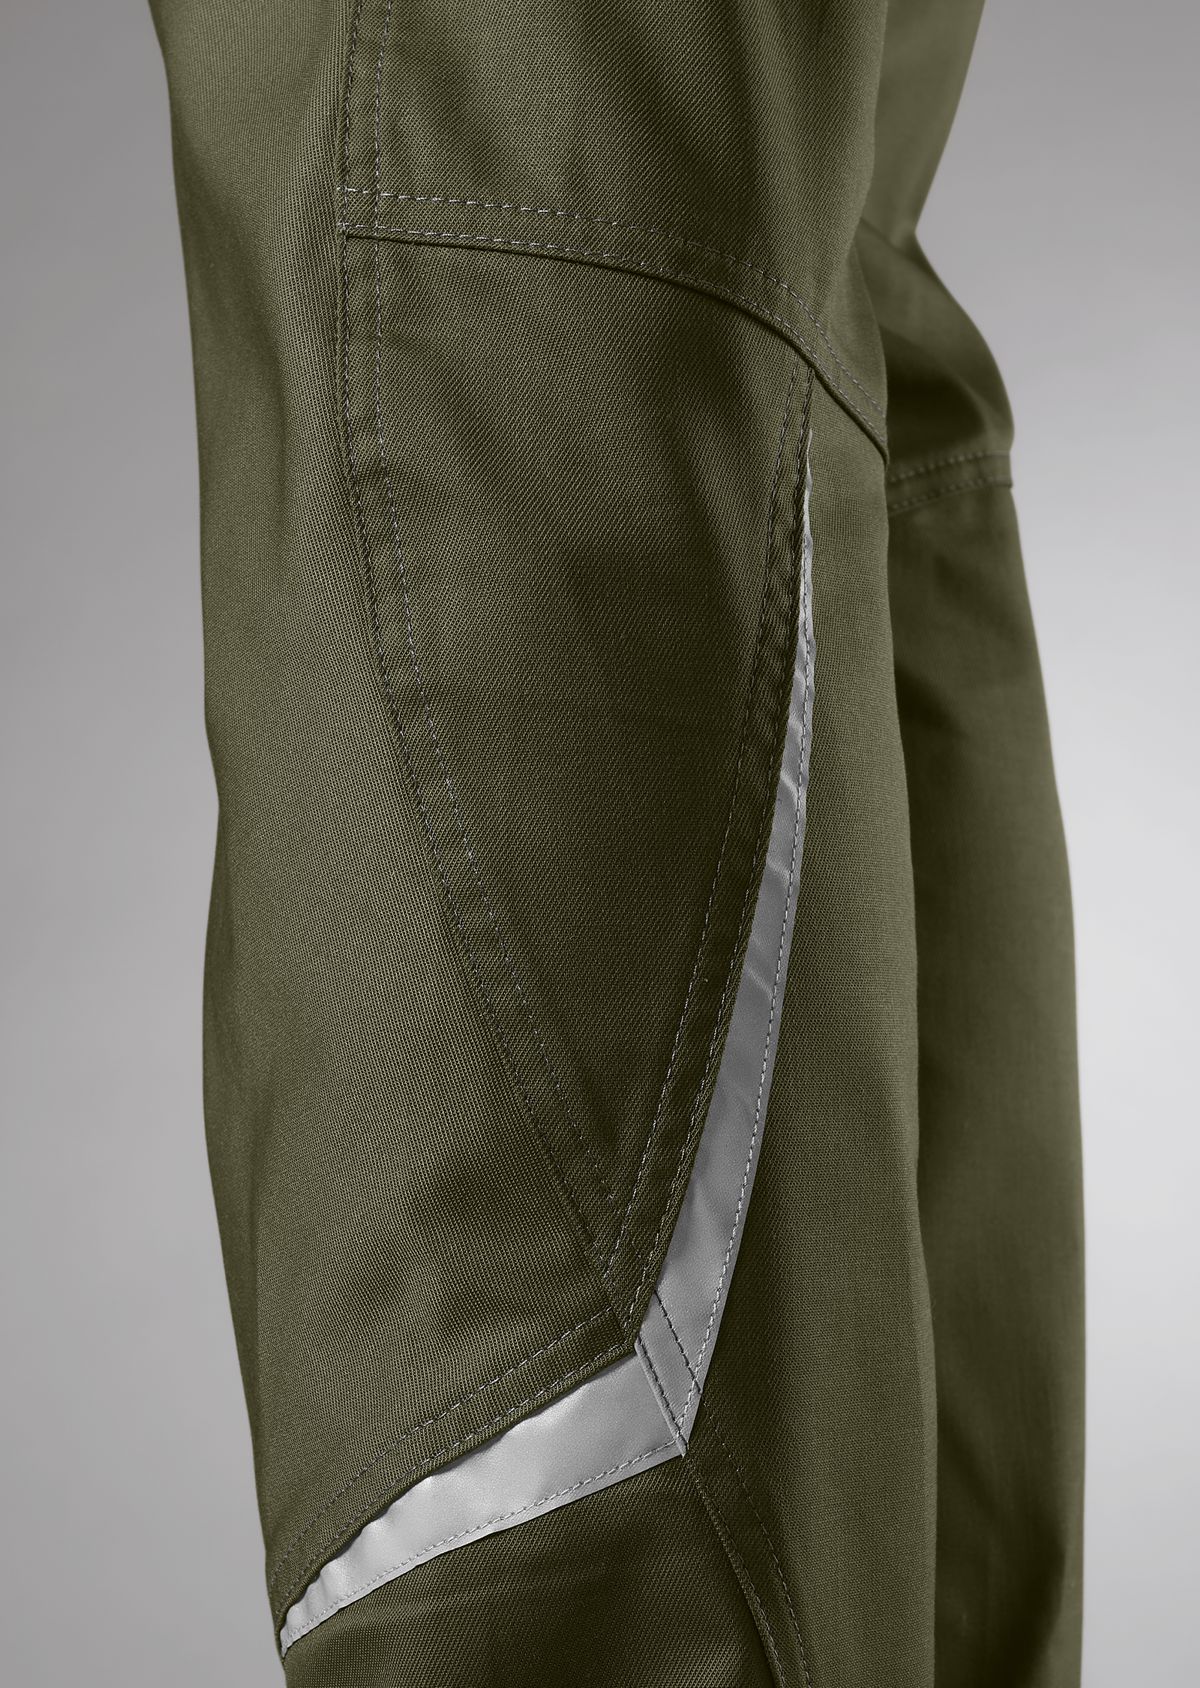 BP® Lightweight slim work trousers